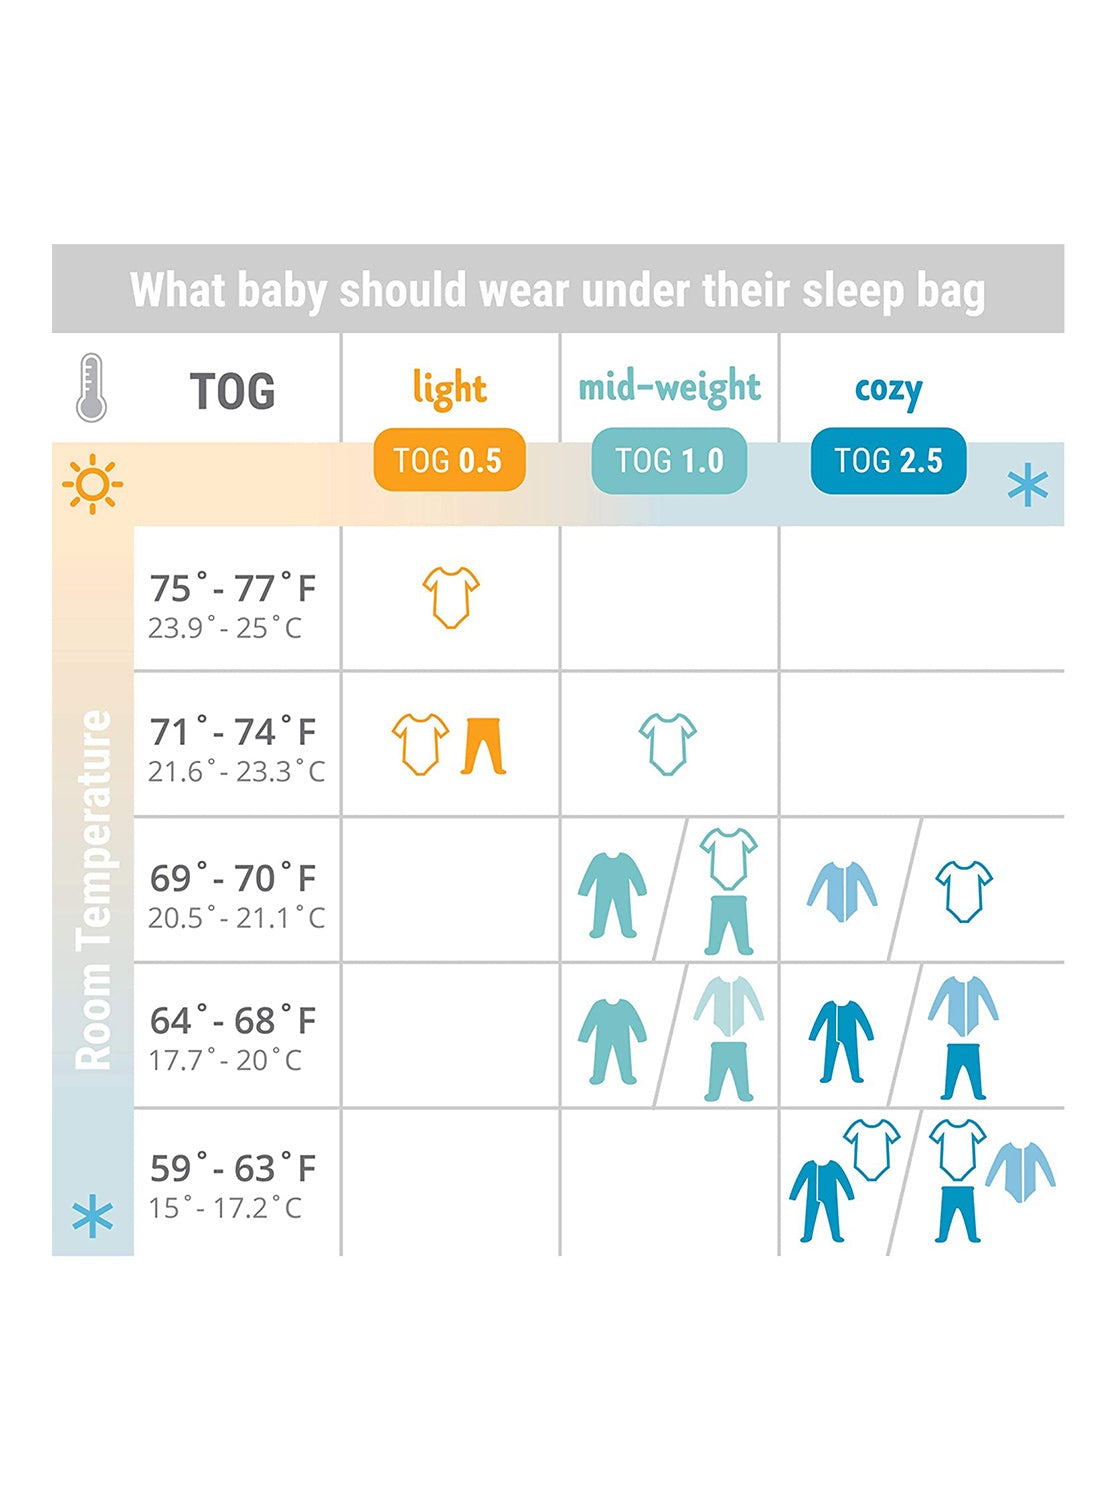 ERGOBABY On the Move Sleep Bag Medium (06-18 Months) TOG 1.0 - ANB Baby -$20 - $50